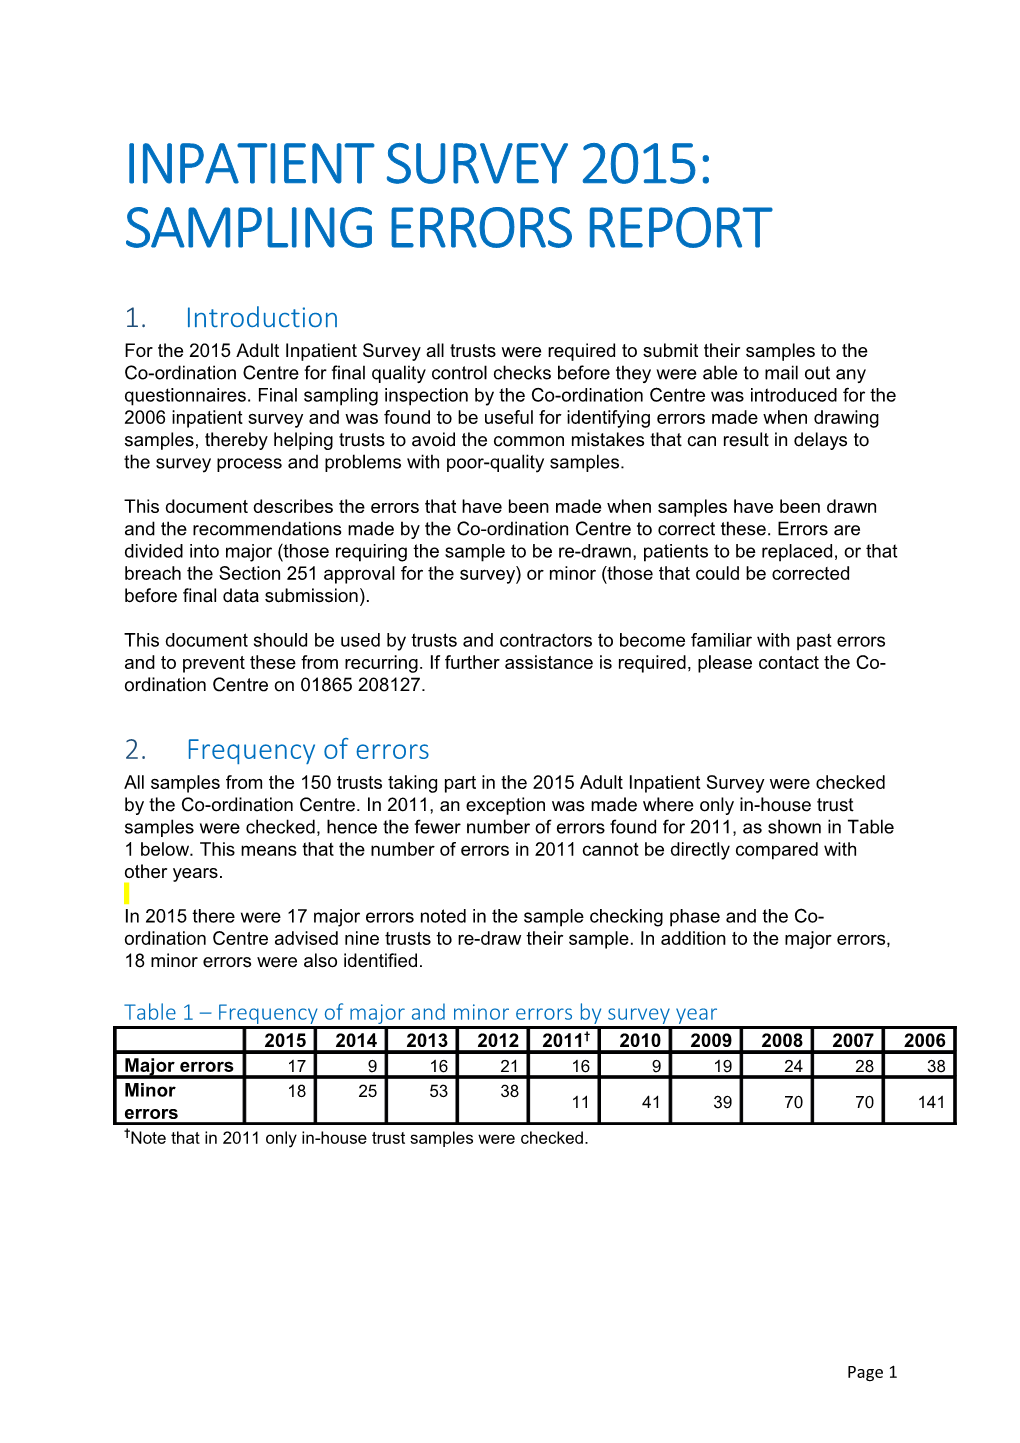 Inpatient Survey 2015: Sampling Errors Report